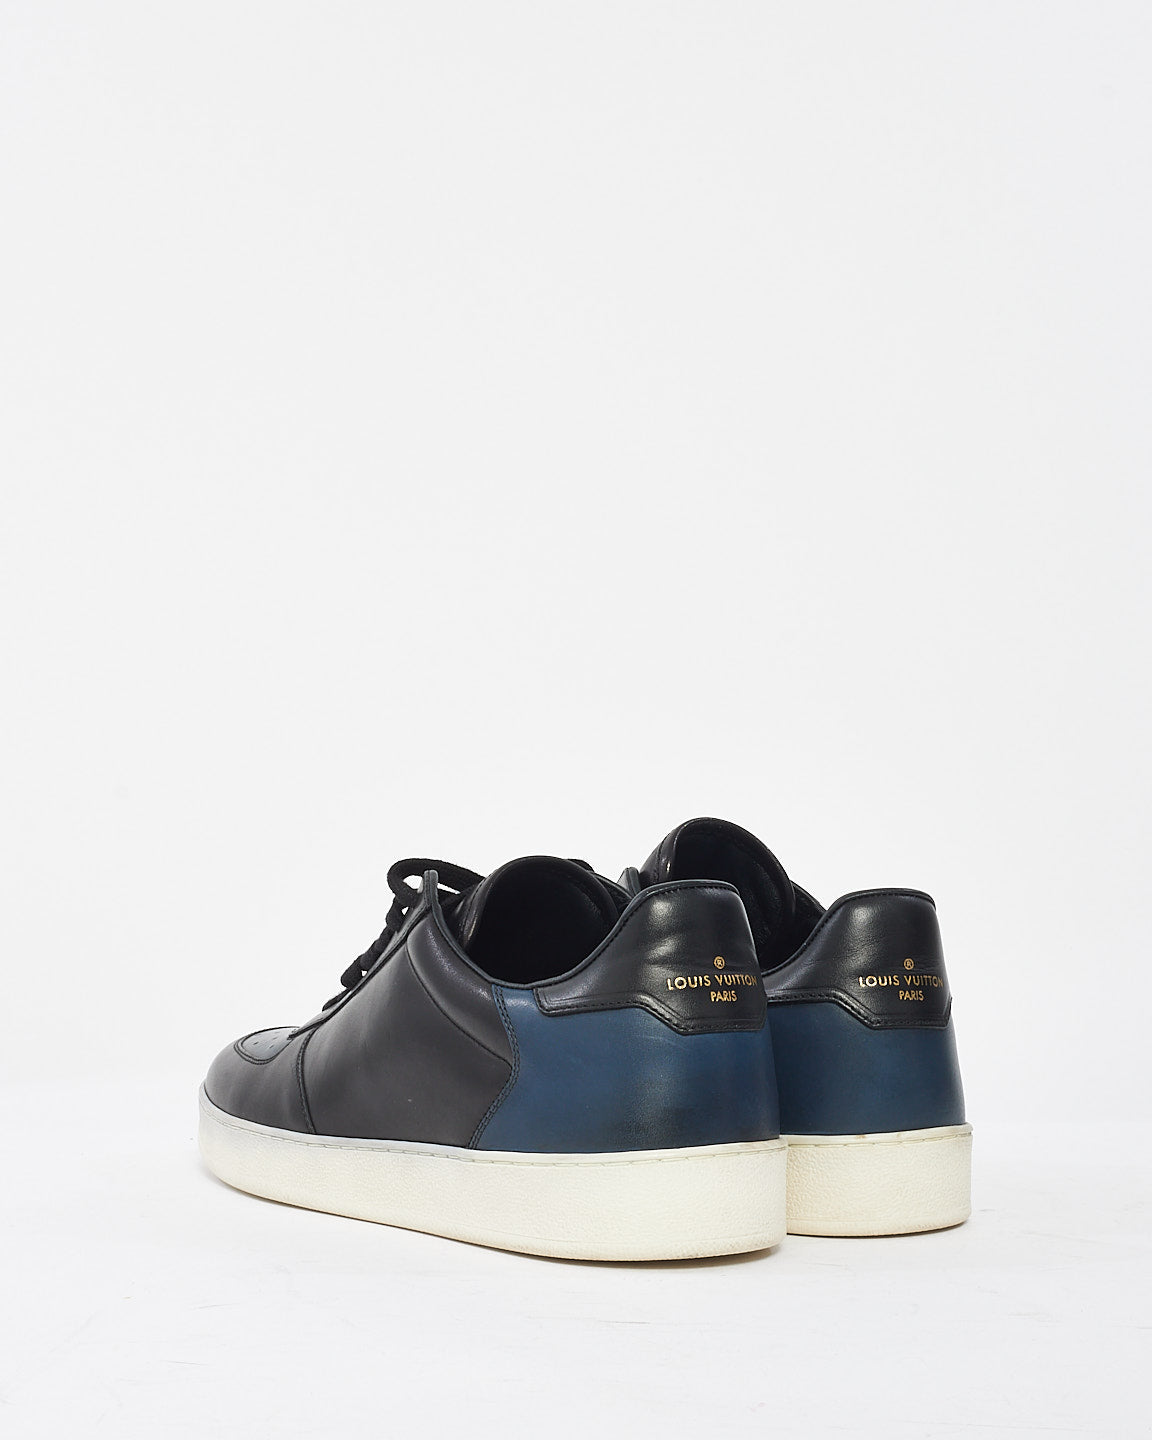 Louis Vuitton Men's Black Leather Low Top Sneakers - 6.5